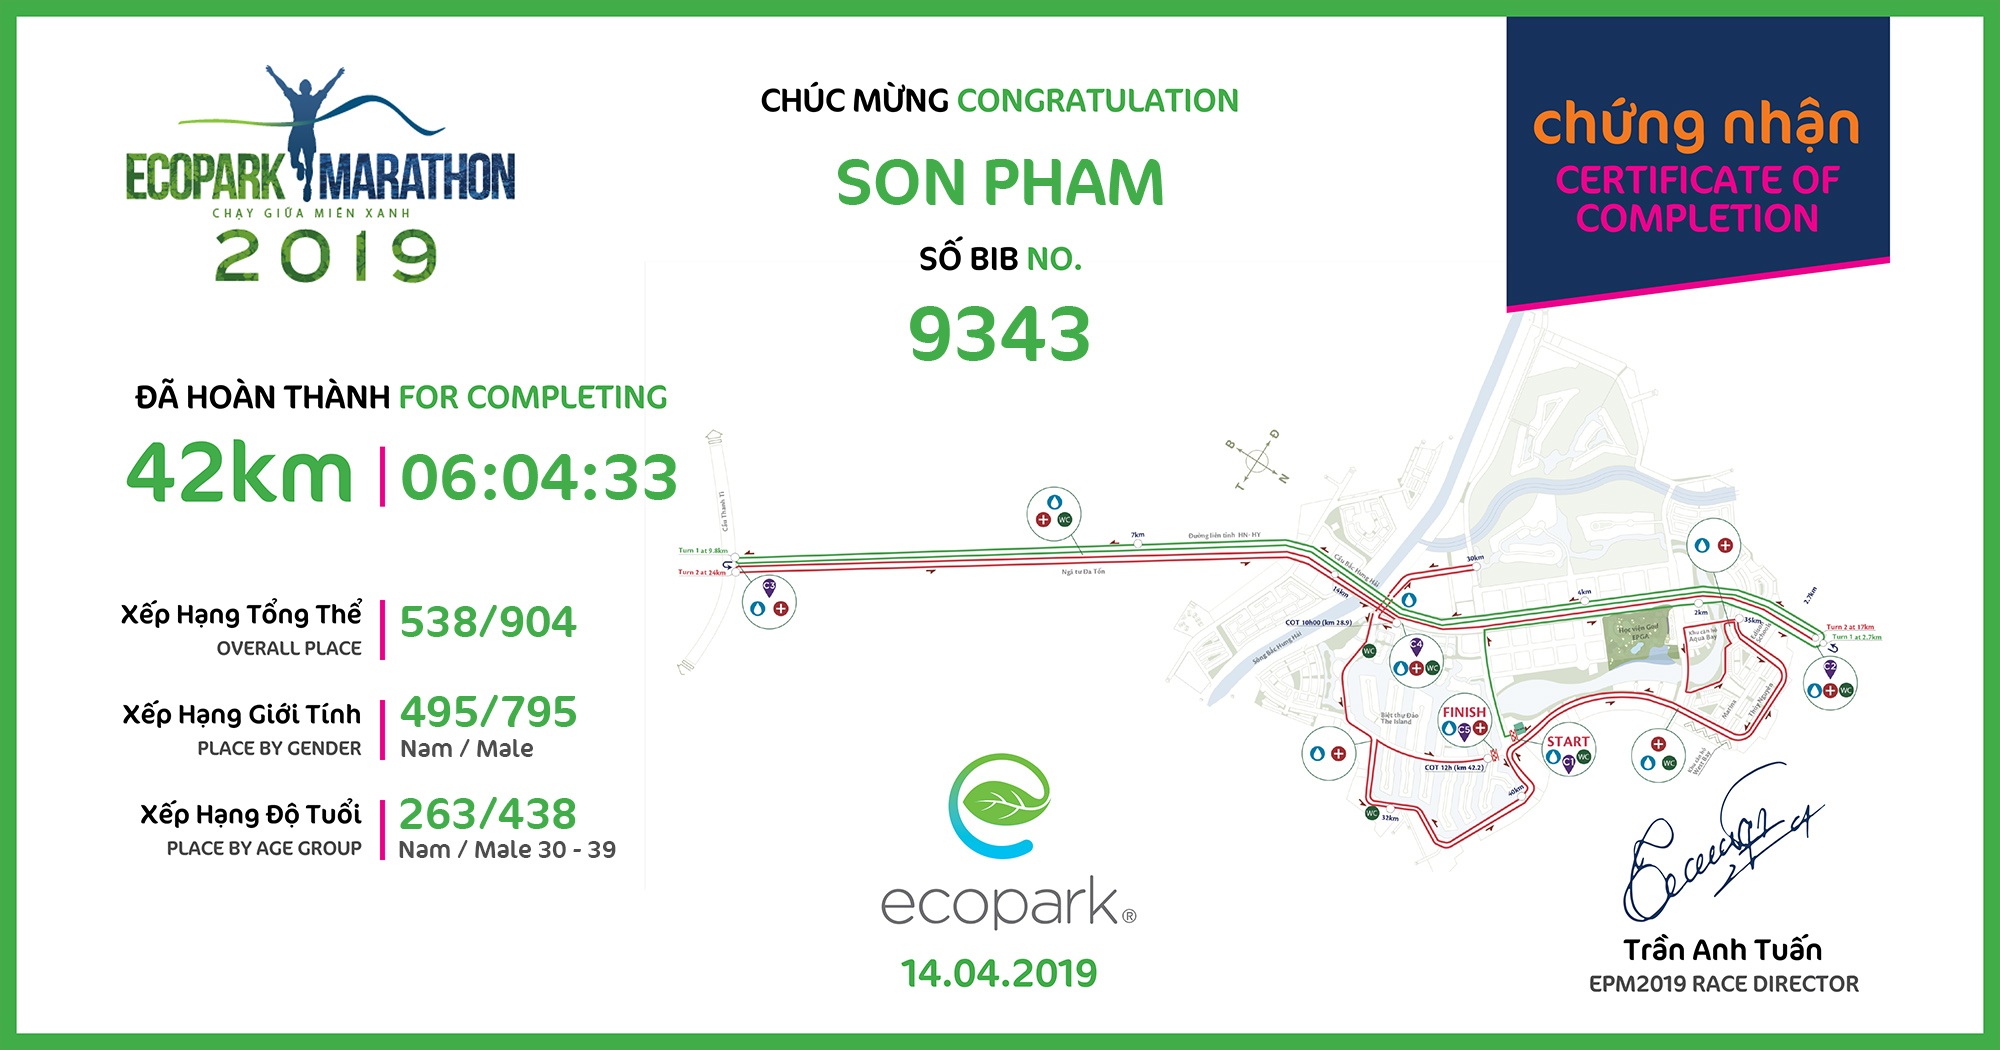 9343 - Son Pham